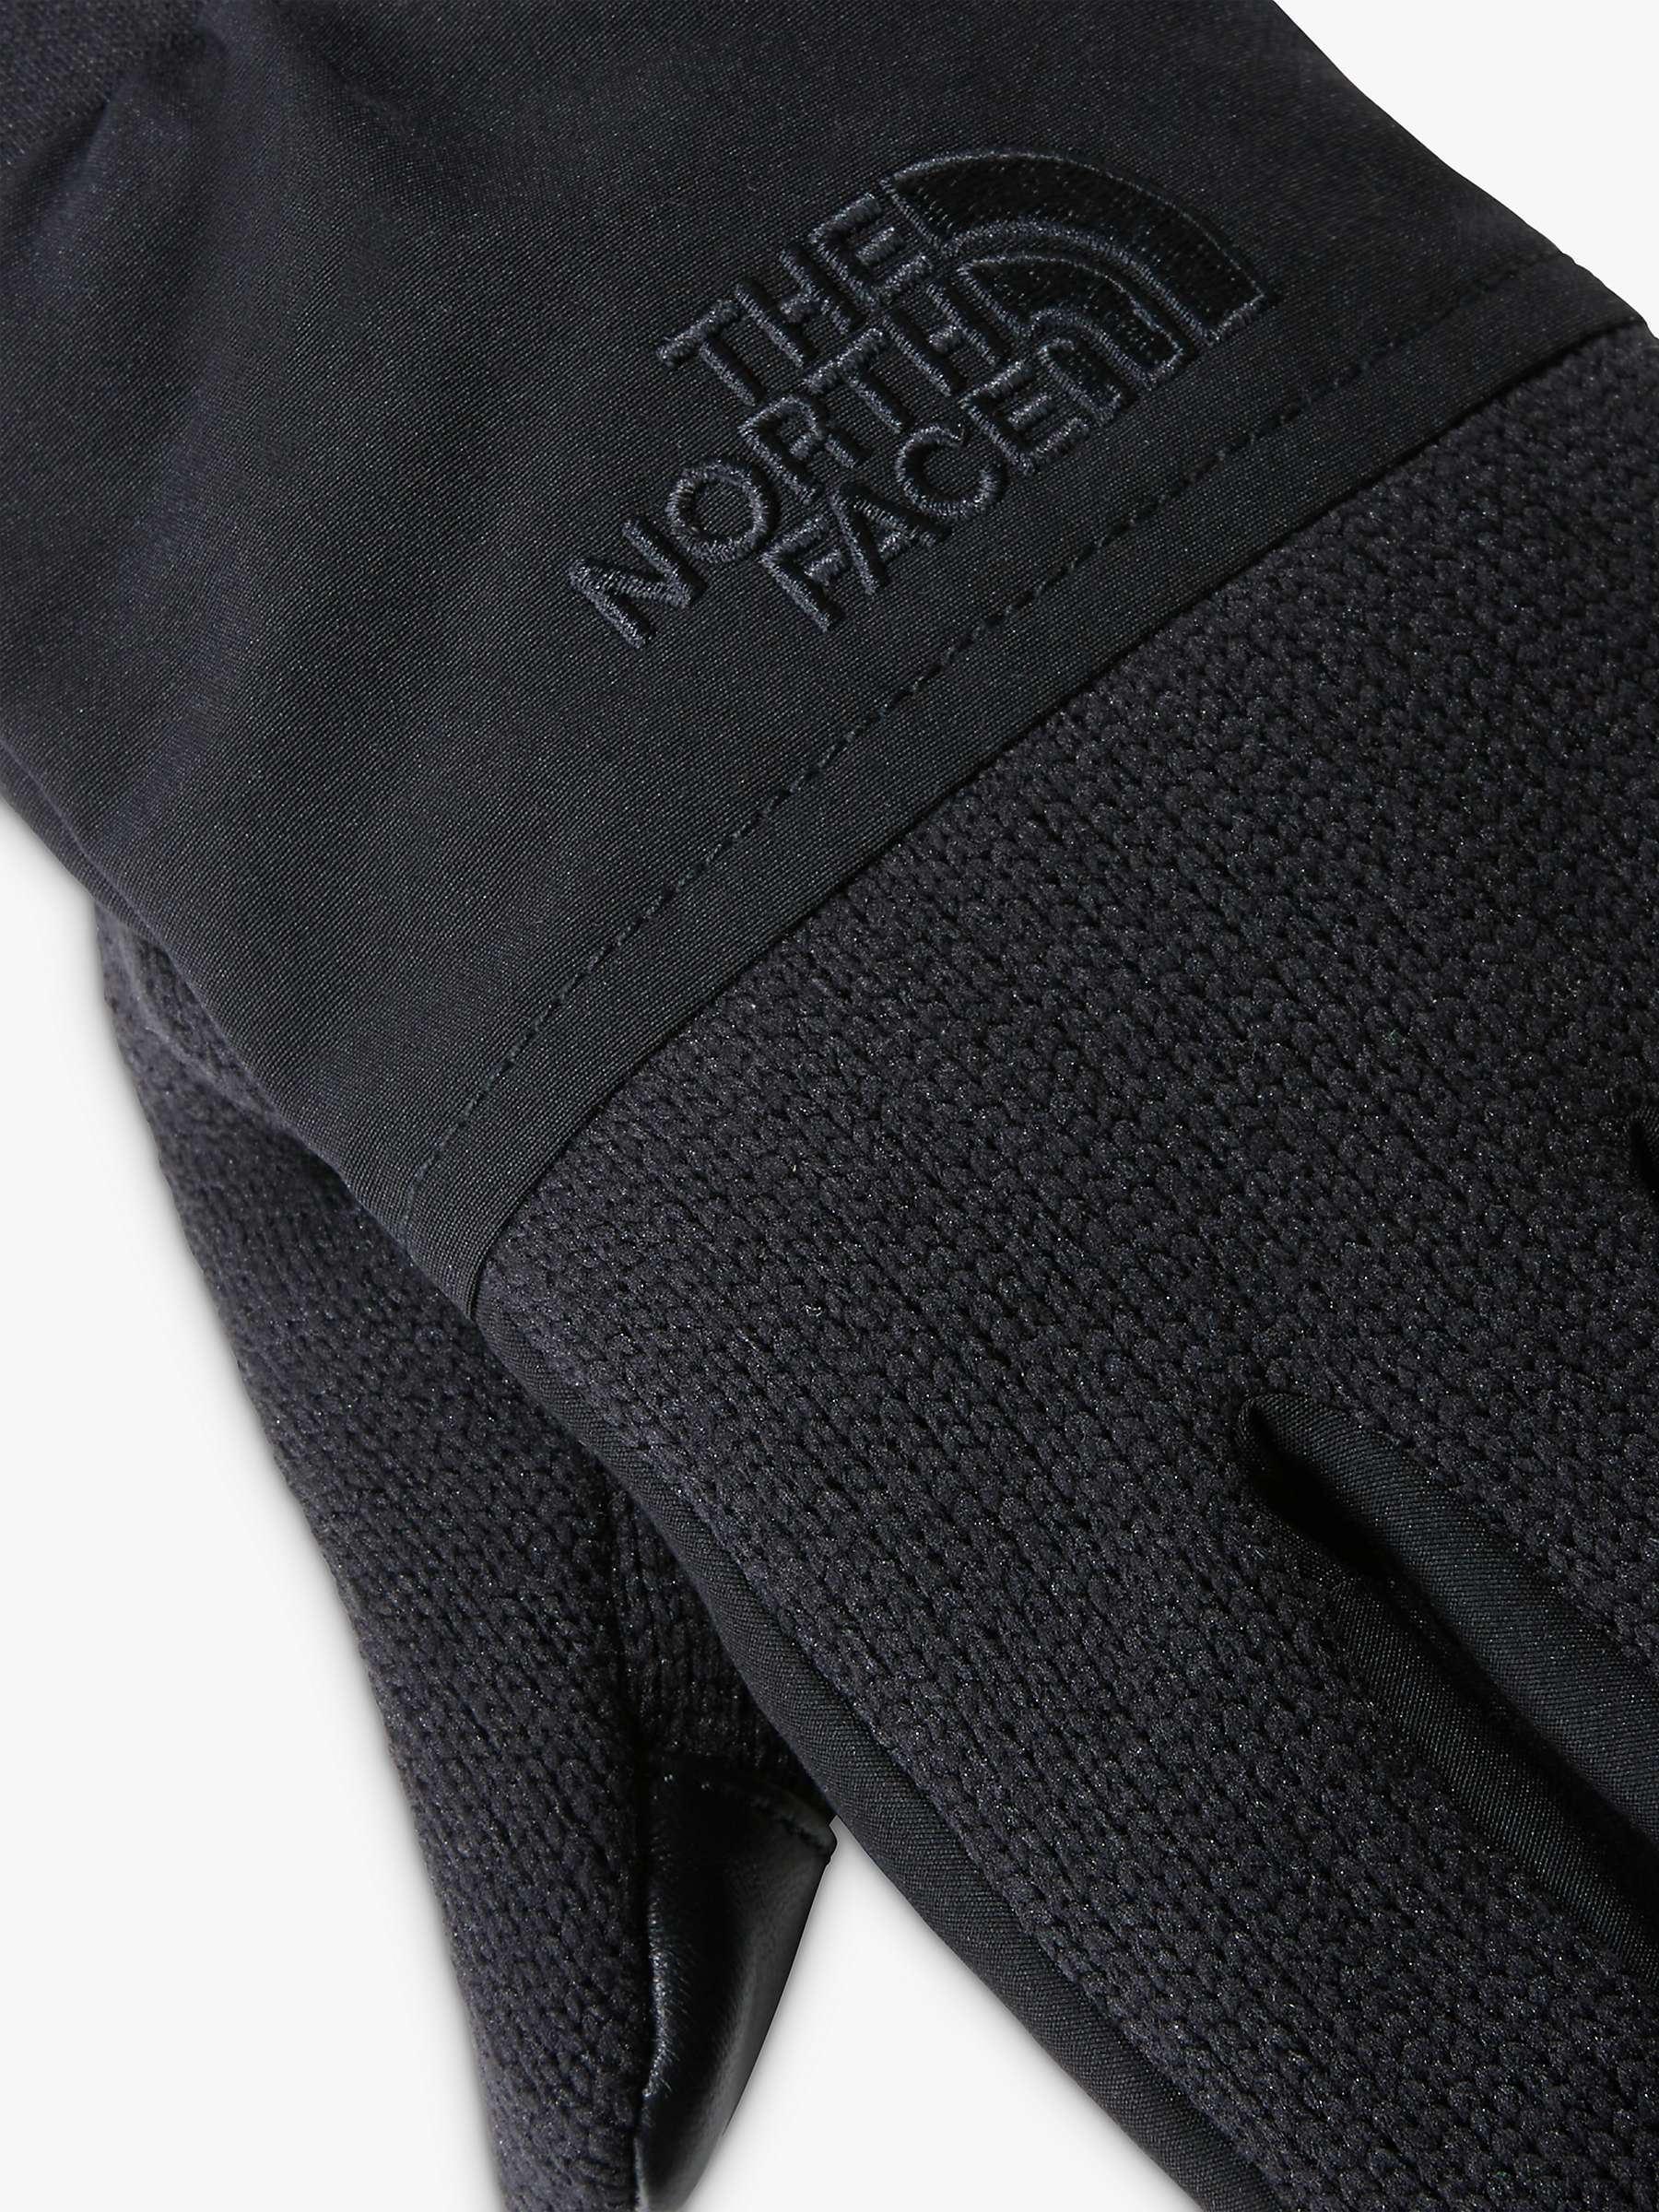 The North Face Front Range Men's Ski Gloves at John Lewis & Partners